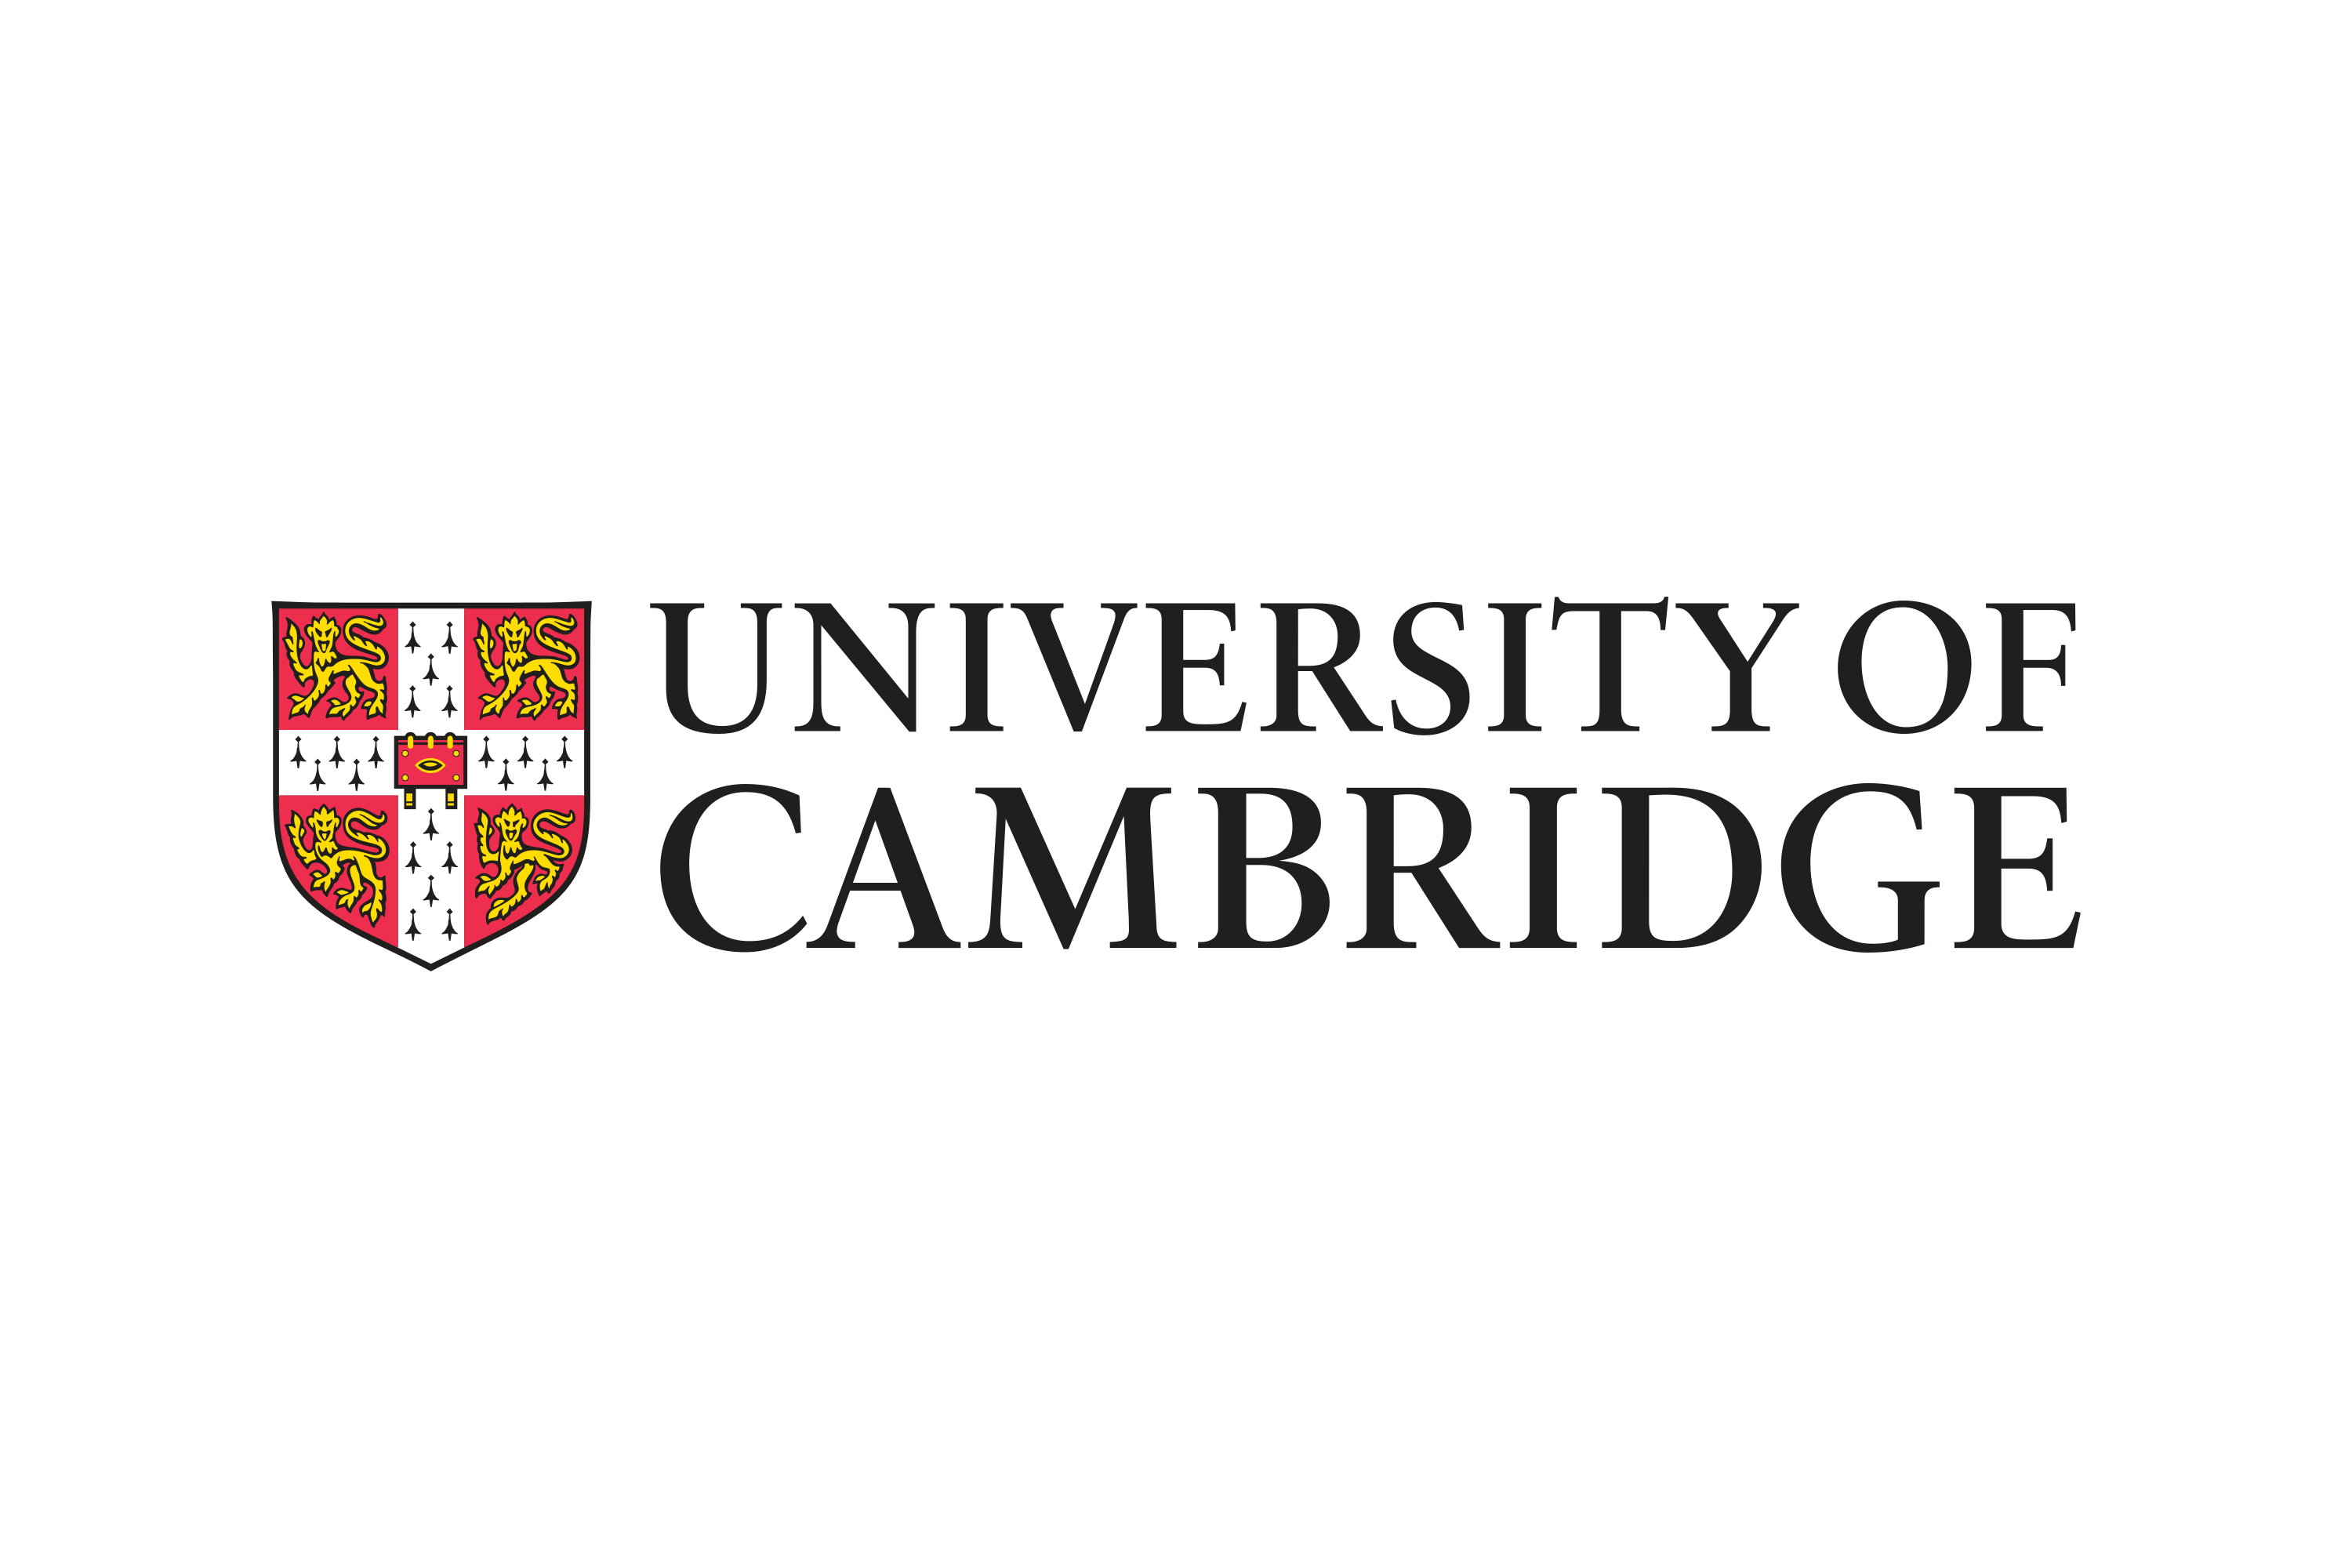 Download University of Cambridge Logo in SVG Vector or PNG File Format